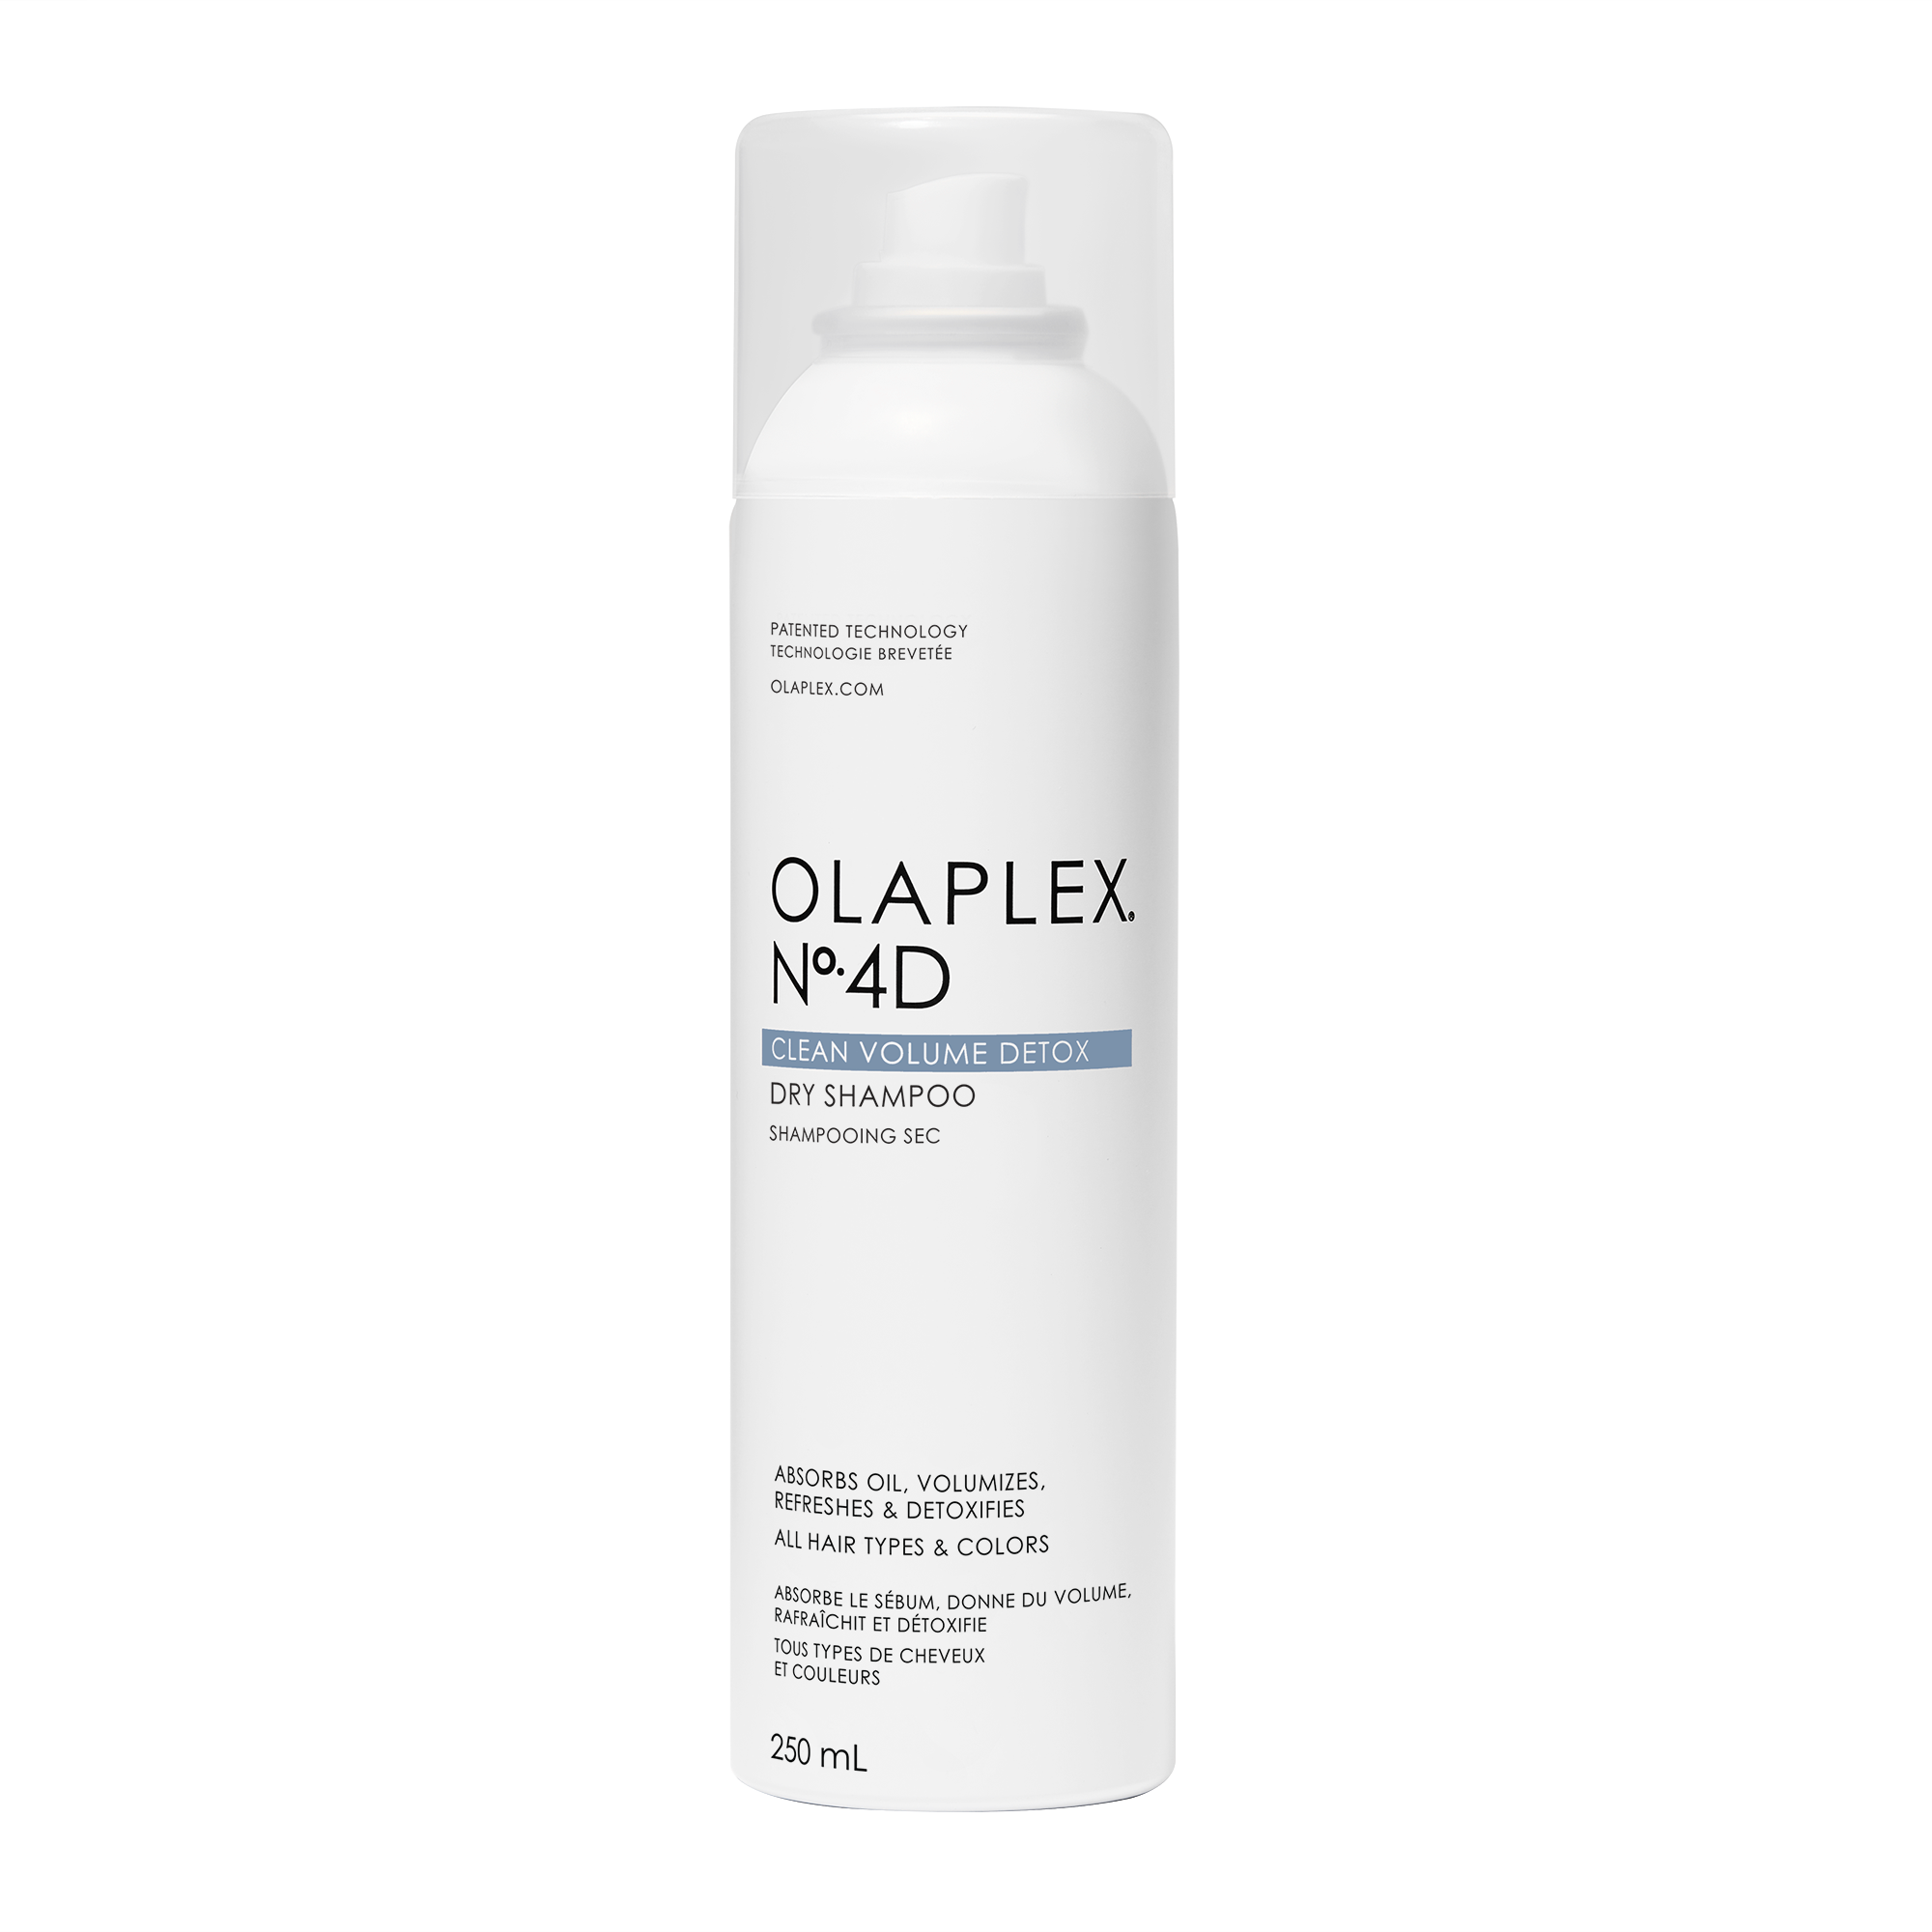 Original OLAPLEX® N°4D Dry Shampoo grid image